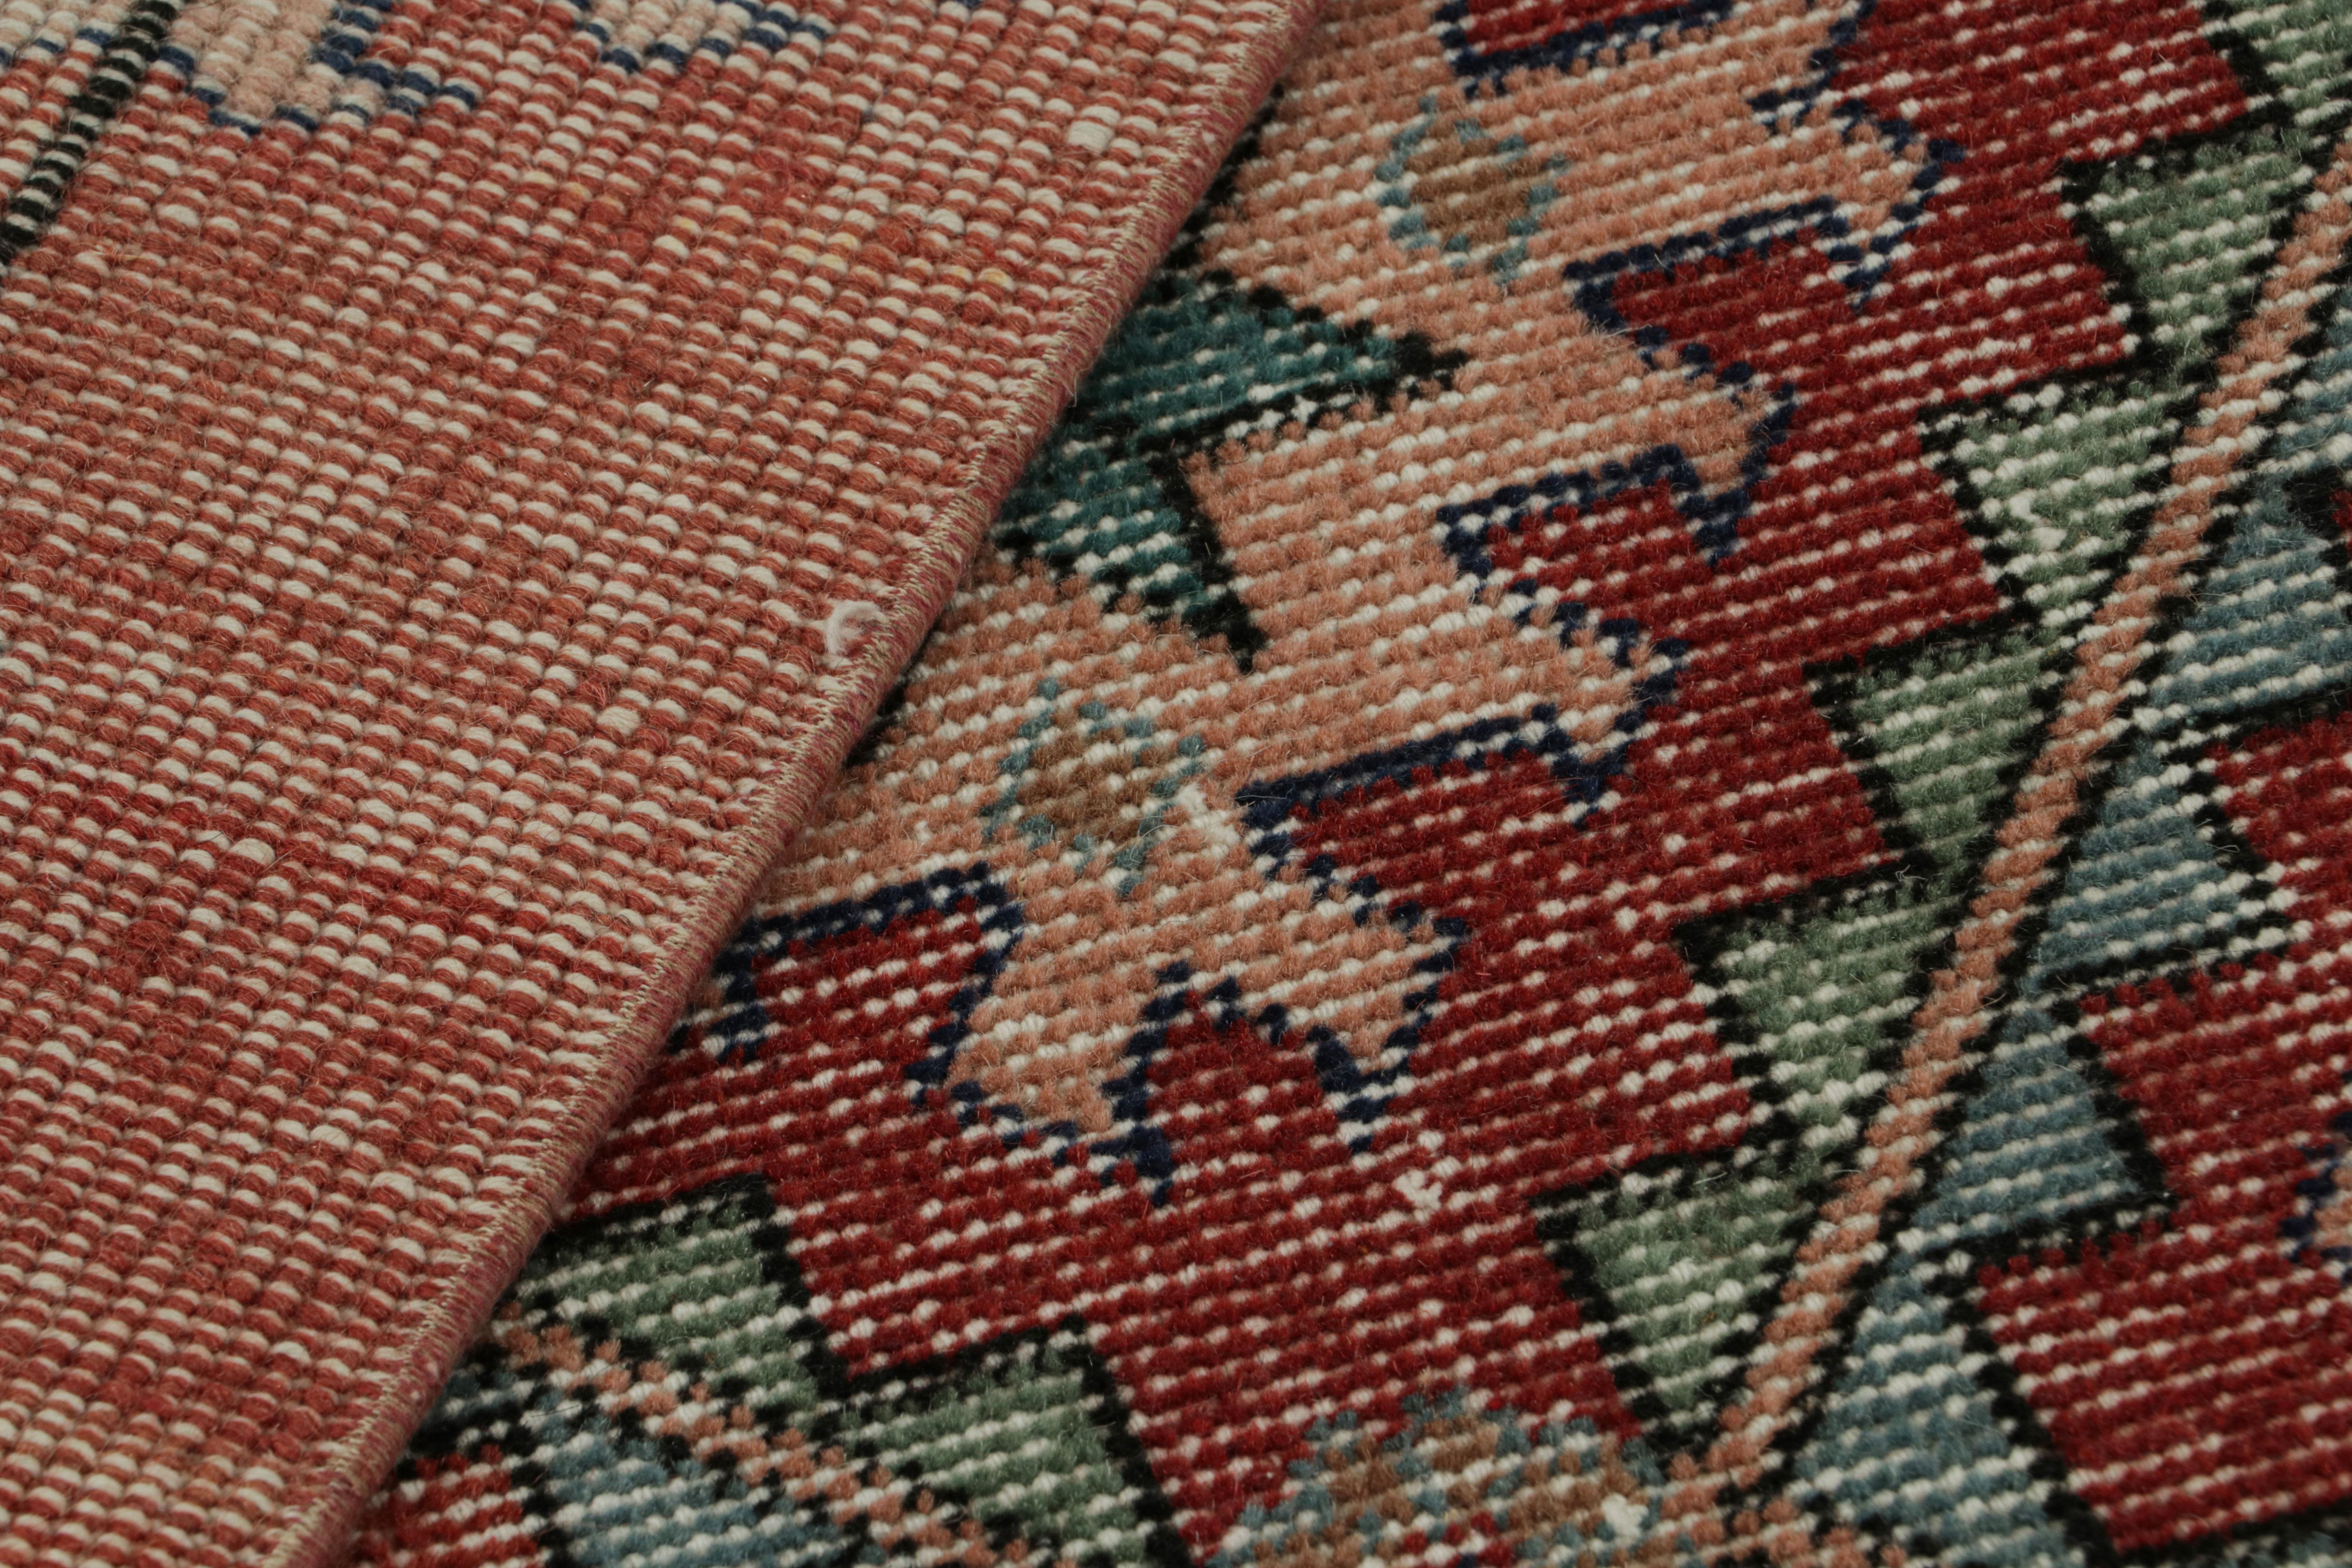 Wool Vintage Zeki Müren Rug in Burgundy with Geometric Patterns, from Rug & Kilim  For Sale